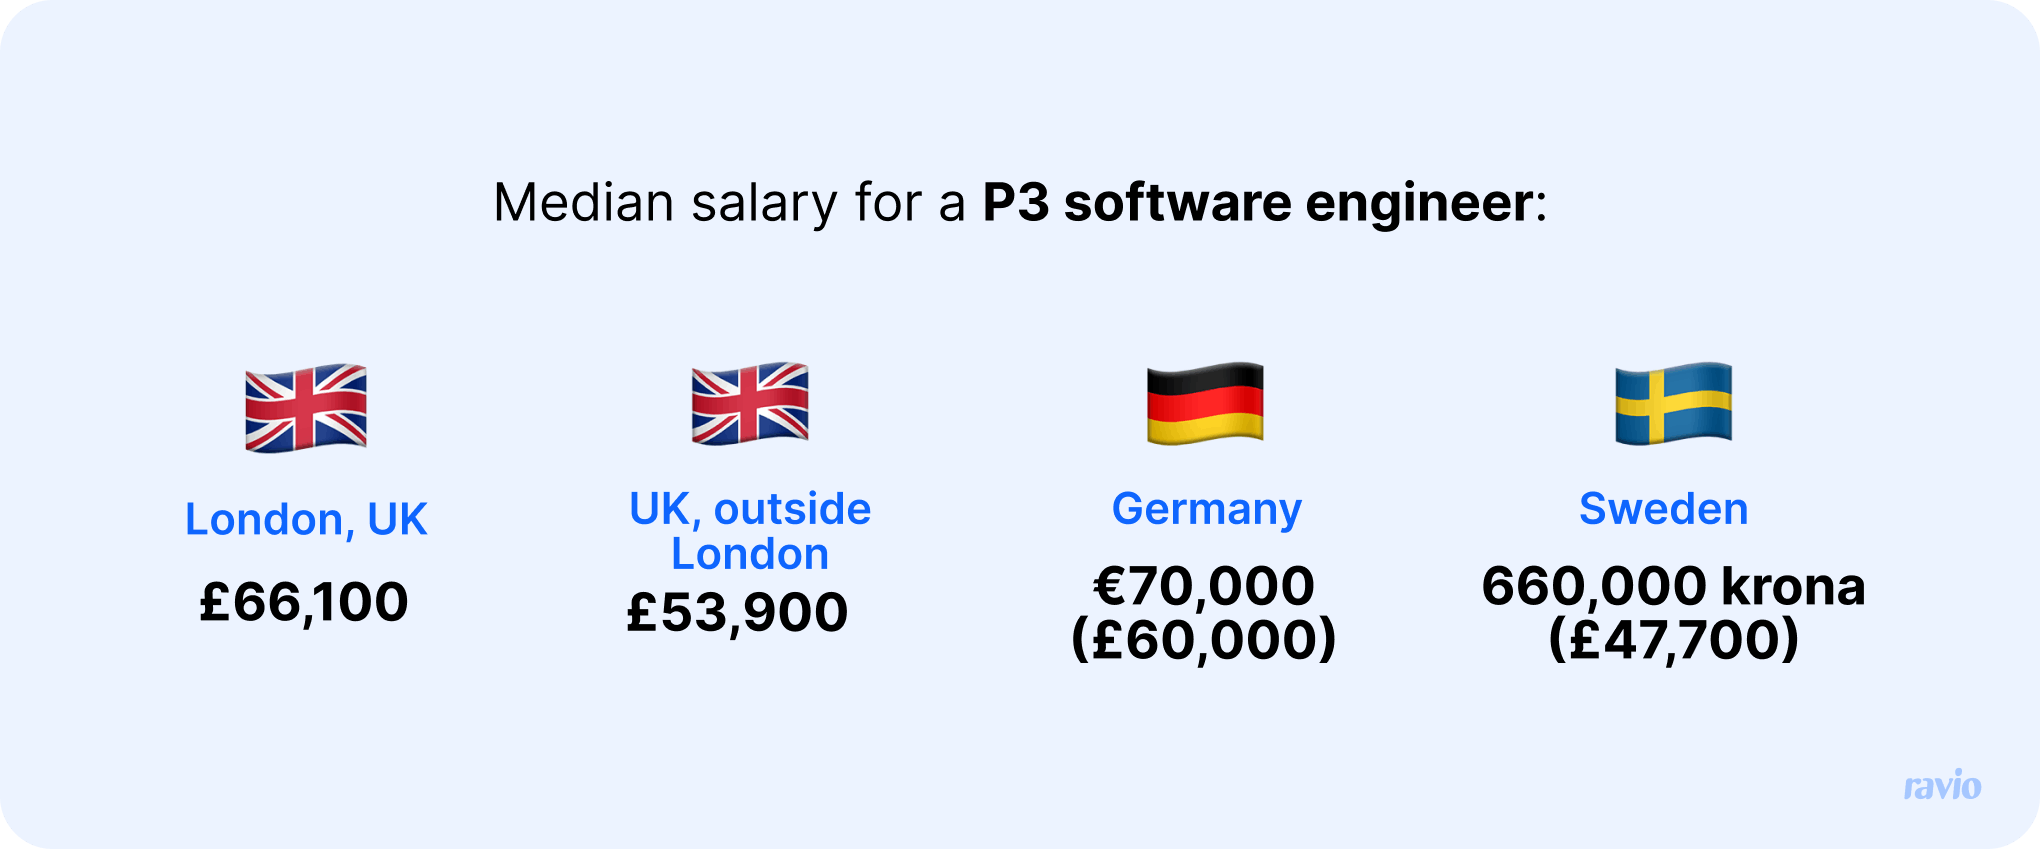 Median salary for a P3 software engineer. UK, London: £66,100. UK, outside London: £53,900. Germany: 70,000 euros (£60,000). Sweden: 660,000 krona (£47,700).